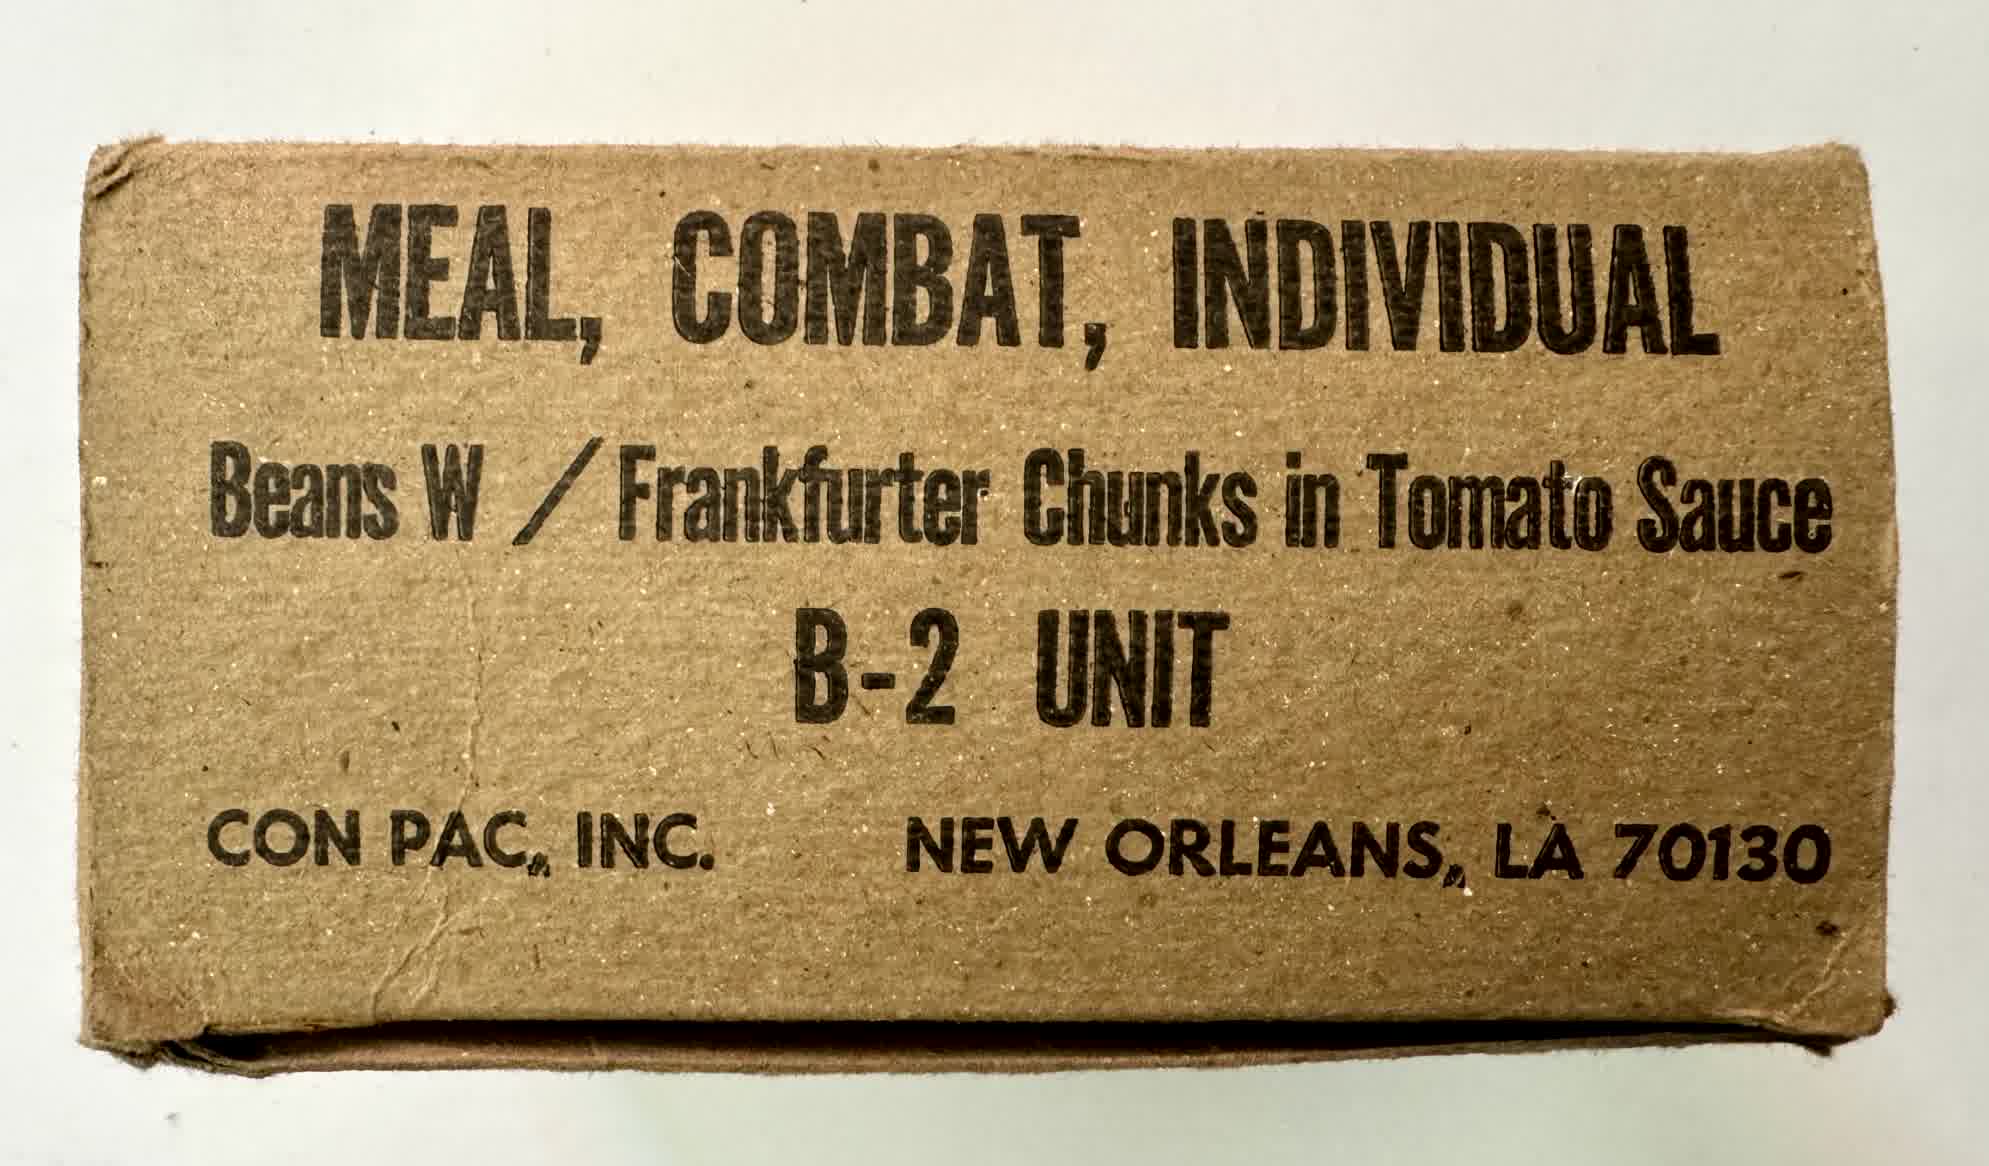 Meal, Combat, Individual B-2 Unit